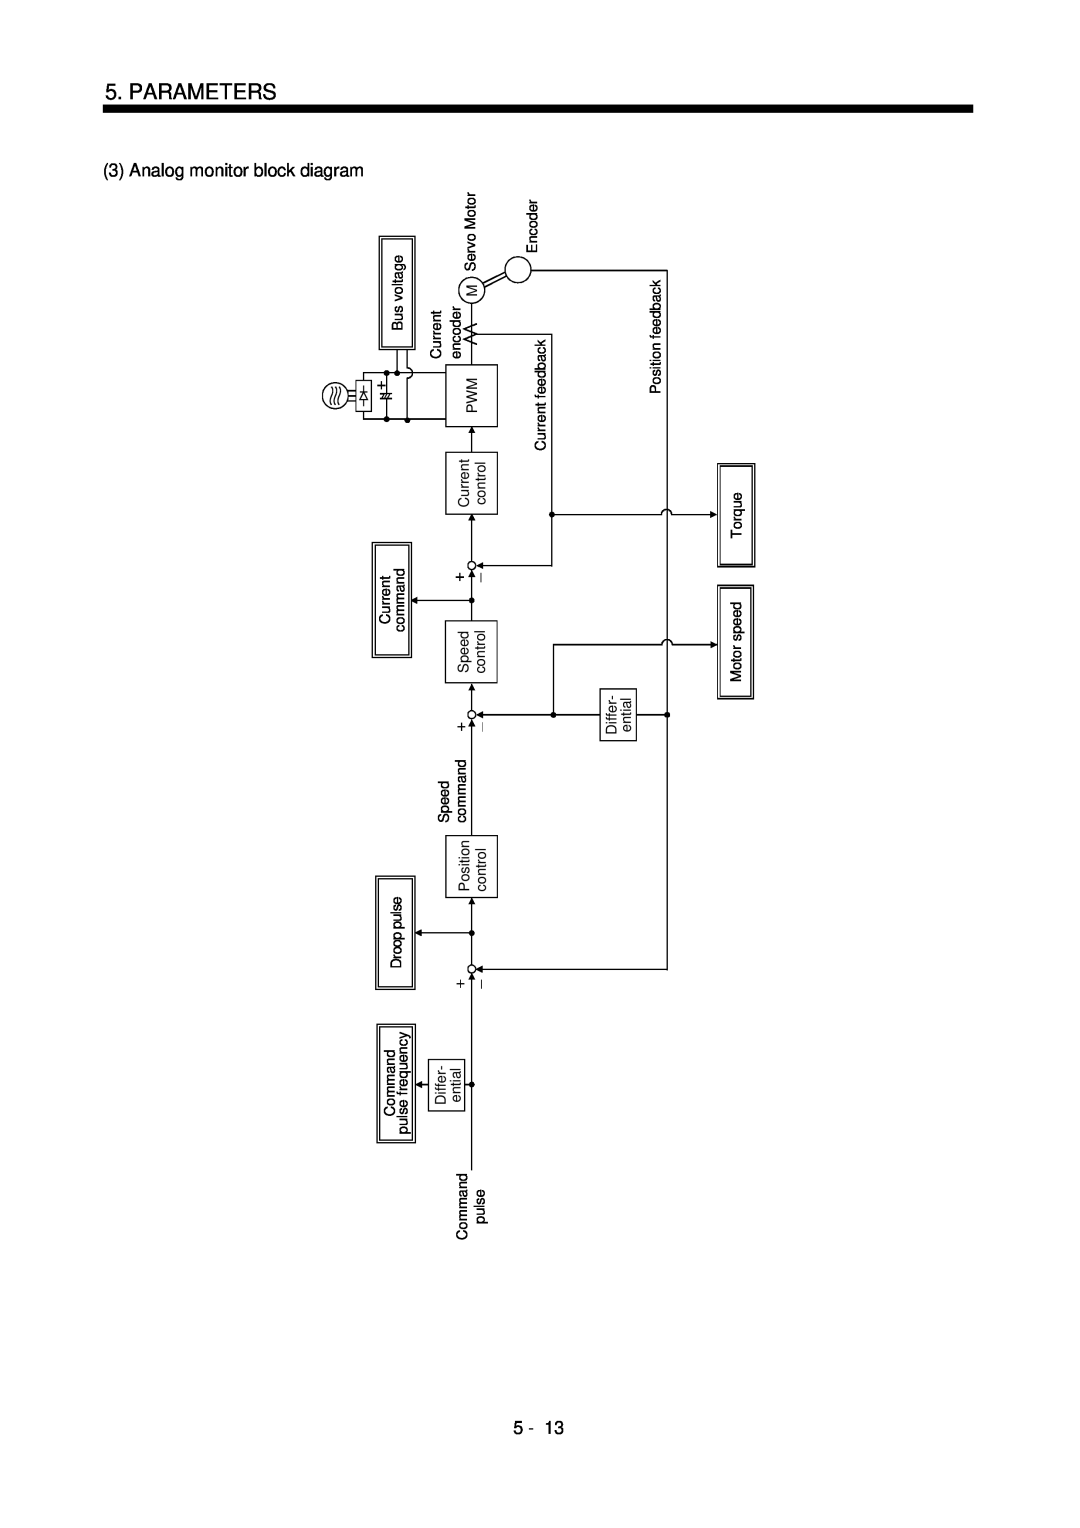 Bose MR-J2S- B instruction manual Analog monitor block diagram, Parameters 